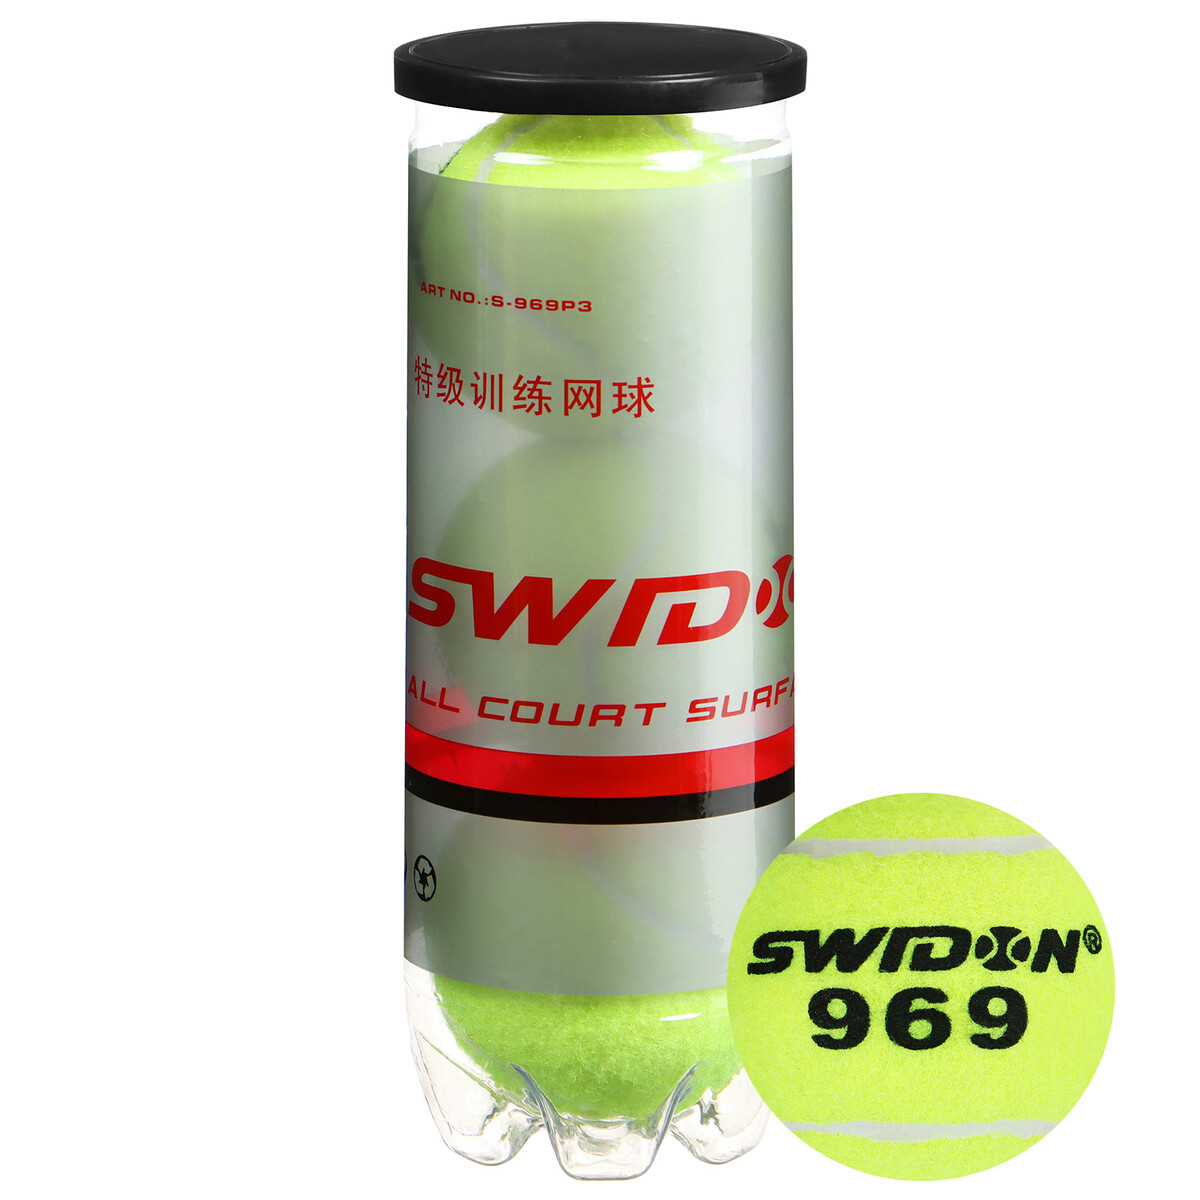 Набор мячей для большого тенниса swidon 969 тренировочный, 3 шт. набор мячей для большого тенниса werkon 969 с давлением 3 шт